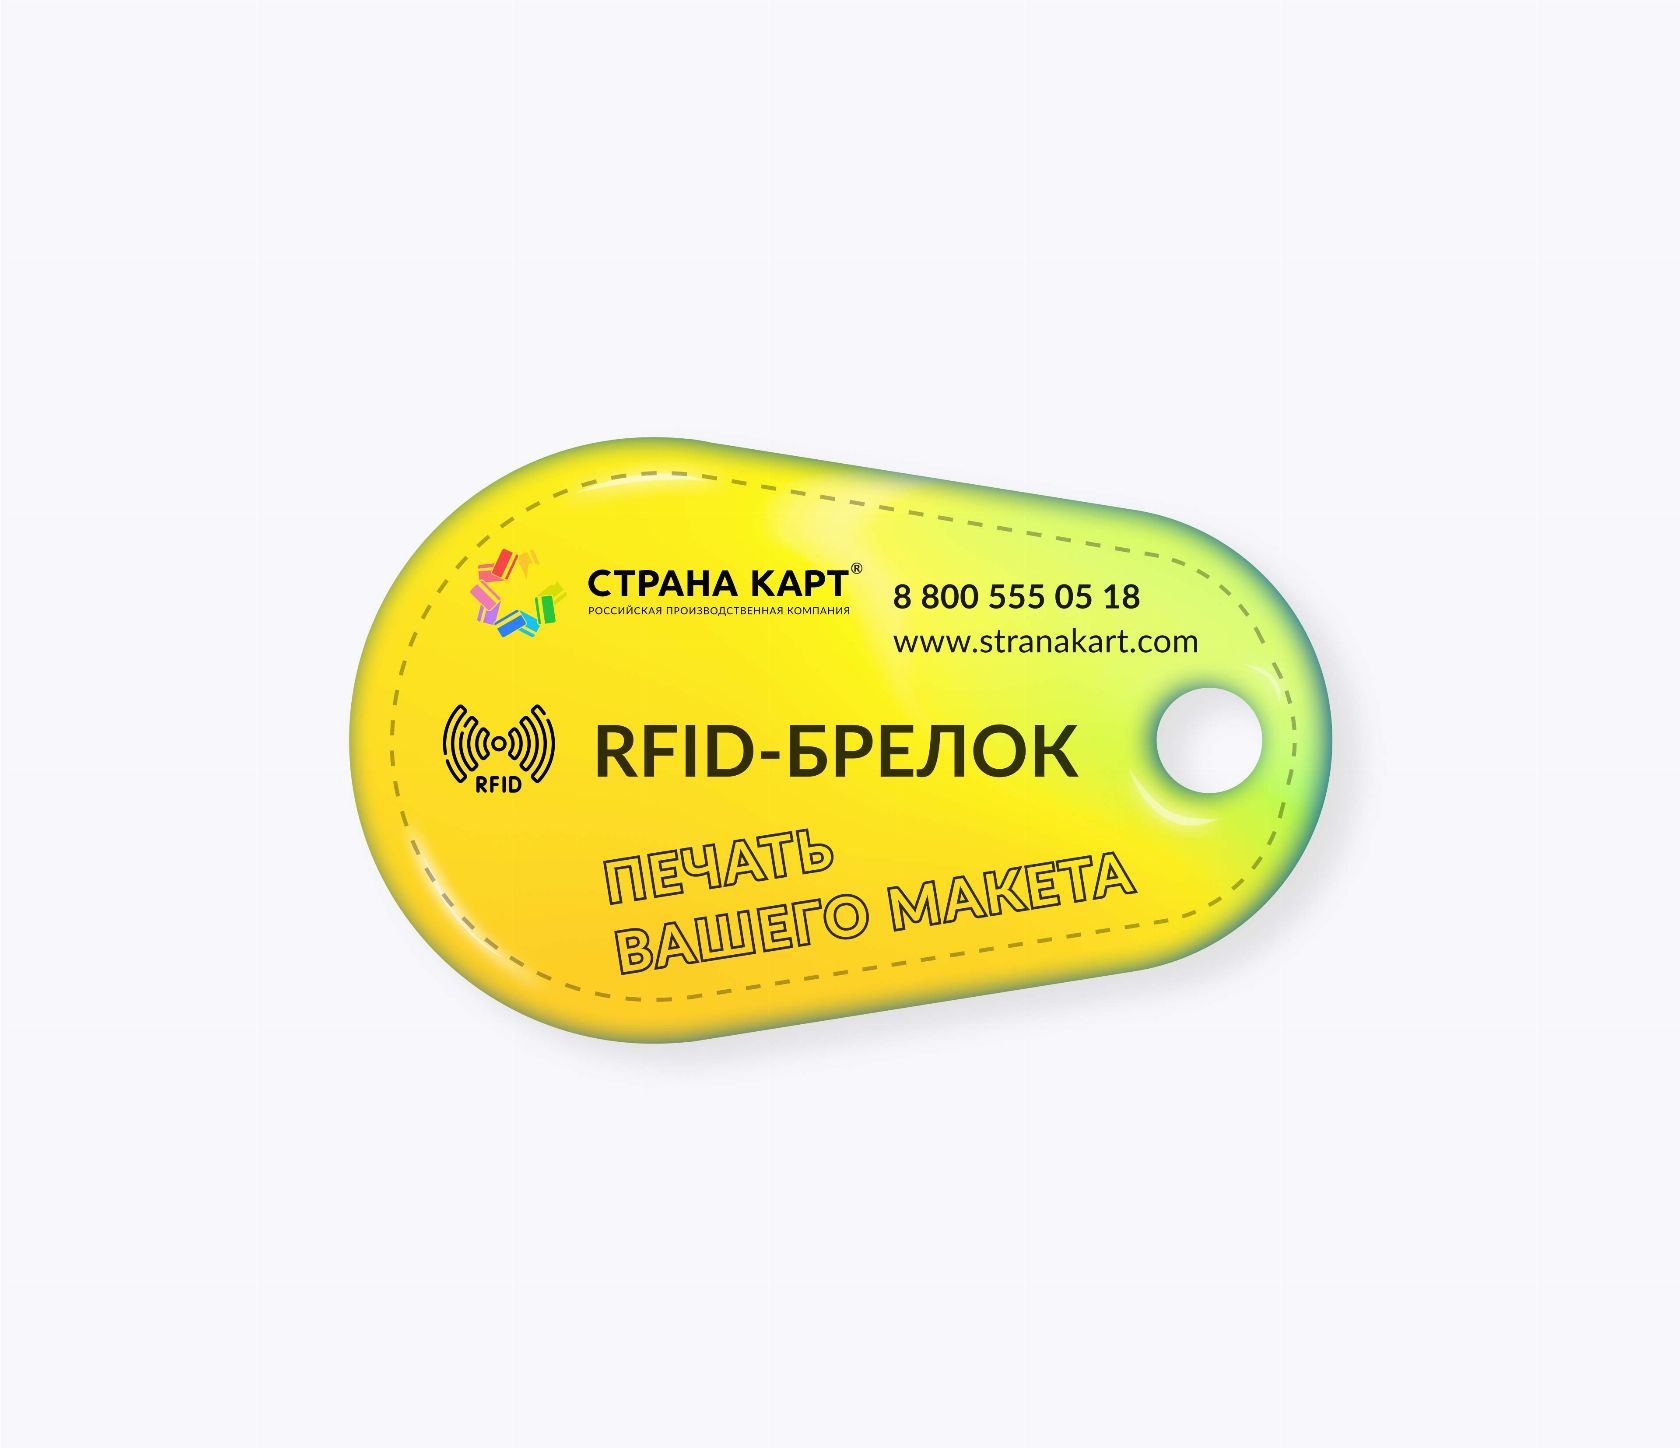 Каплевидные RFID-брелоки NEOKEY® с чипом MIK1KMCM 7 byte UID RFID-брелоки NEOKEY® с чипом MIK1KMCM 7 byte UID и вашим логотипом